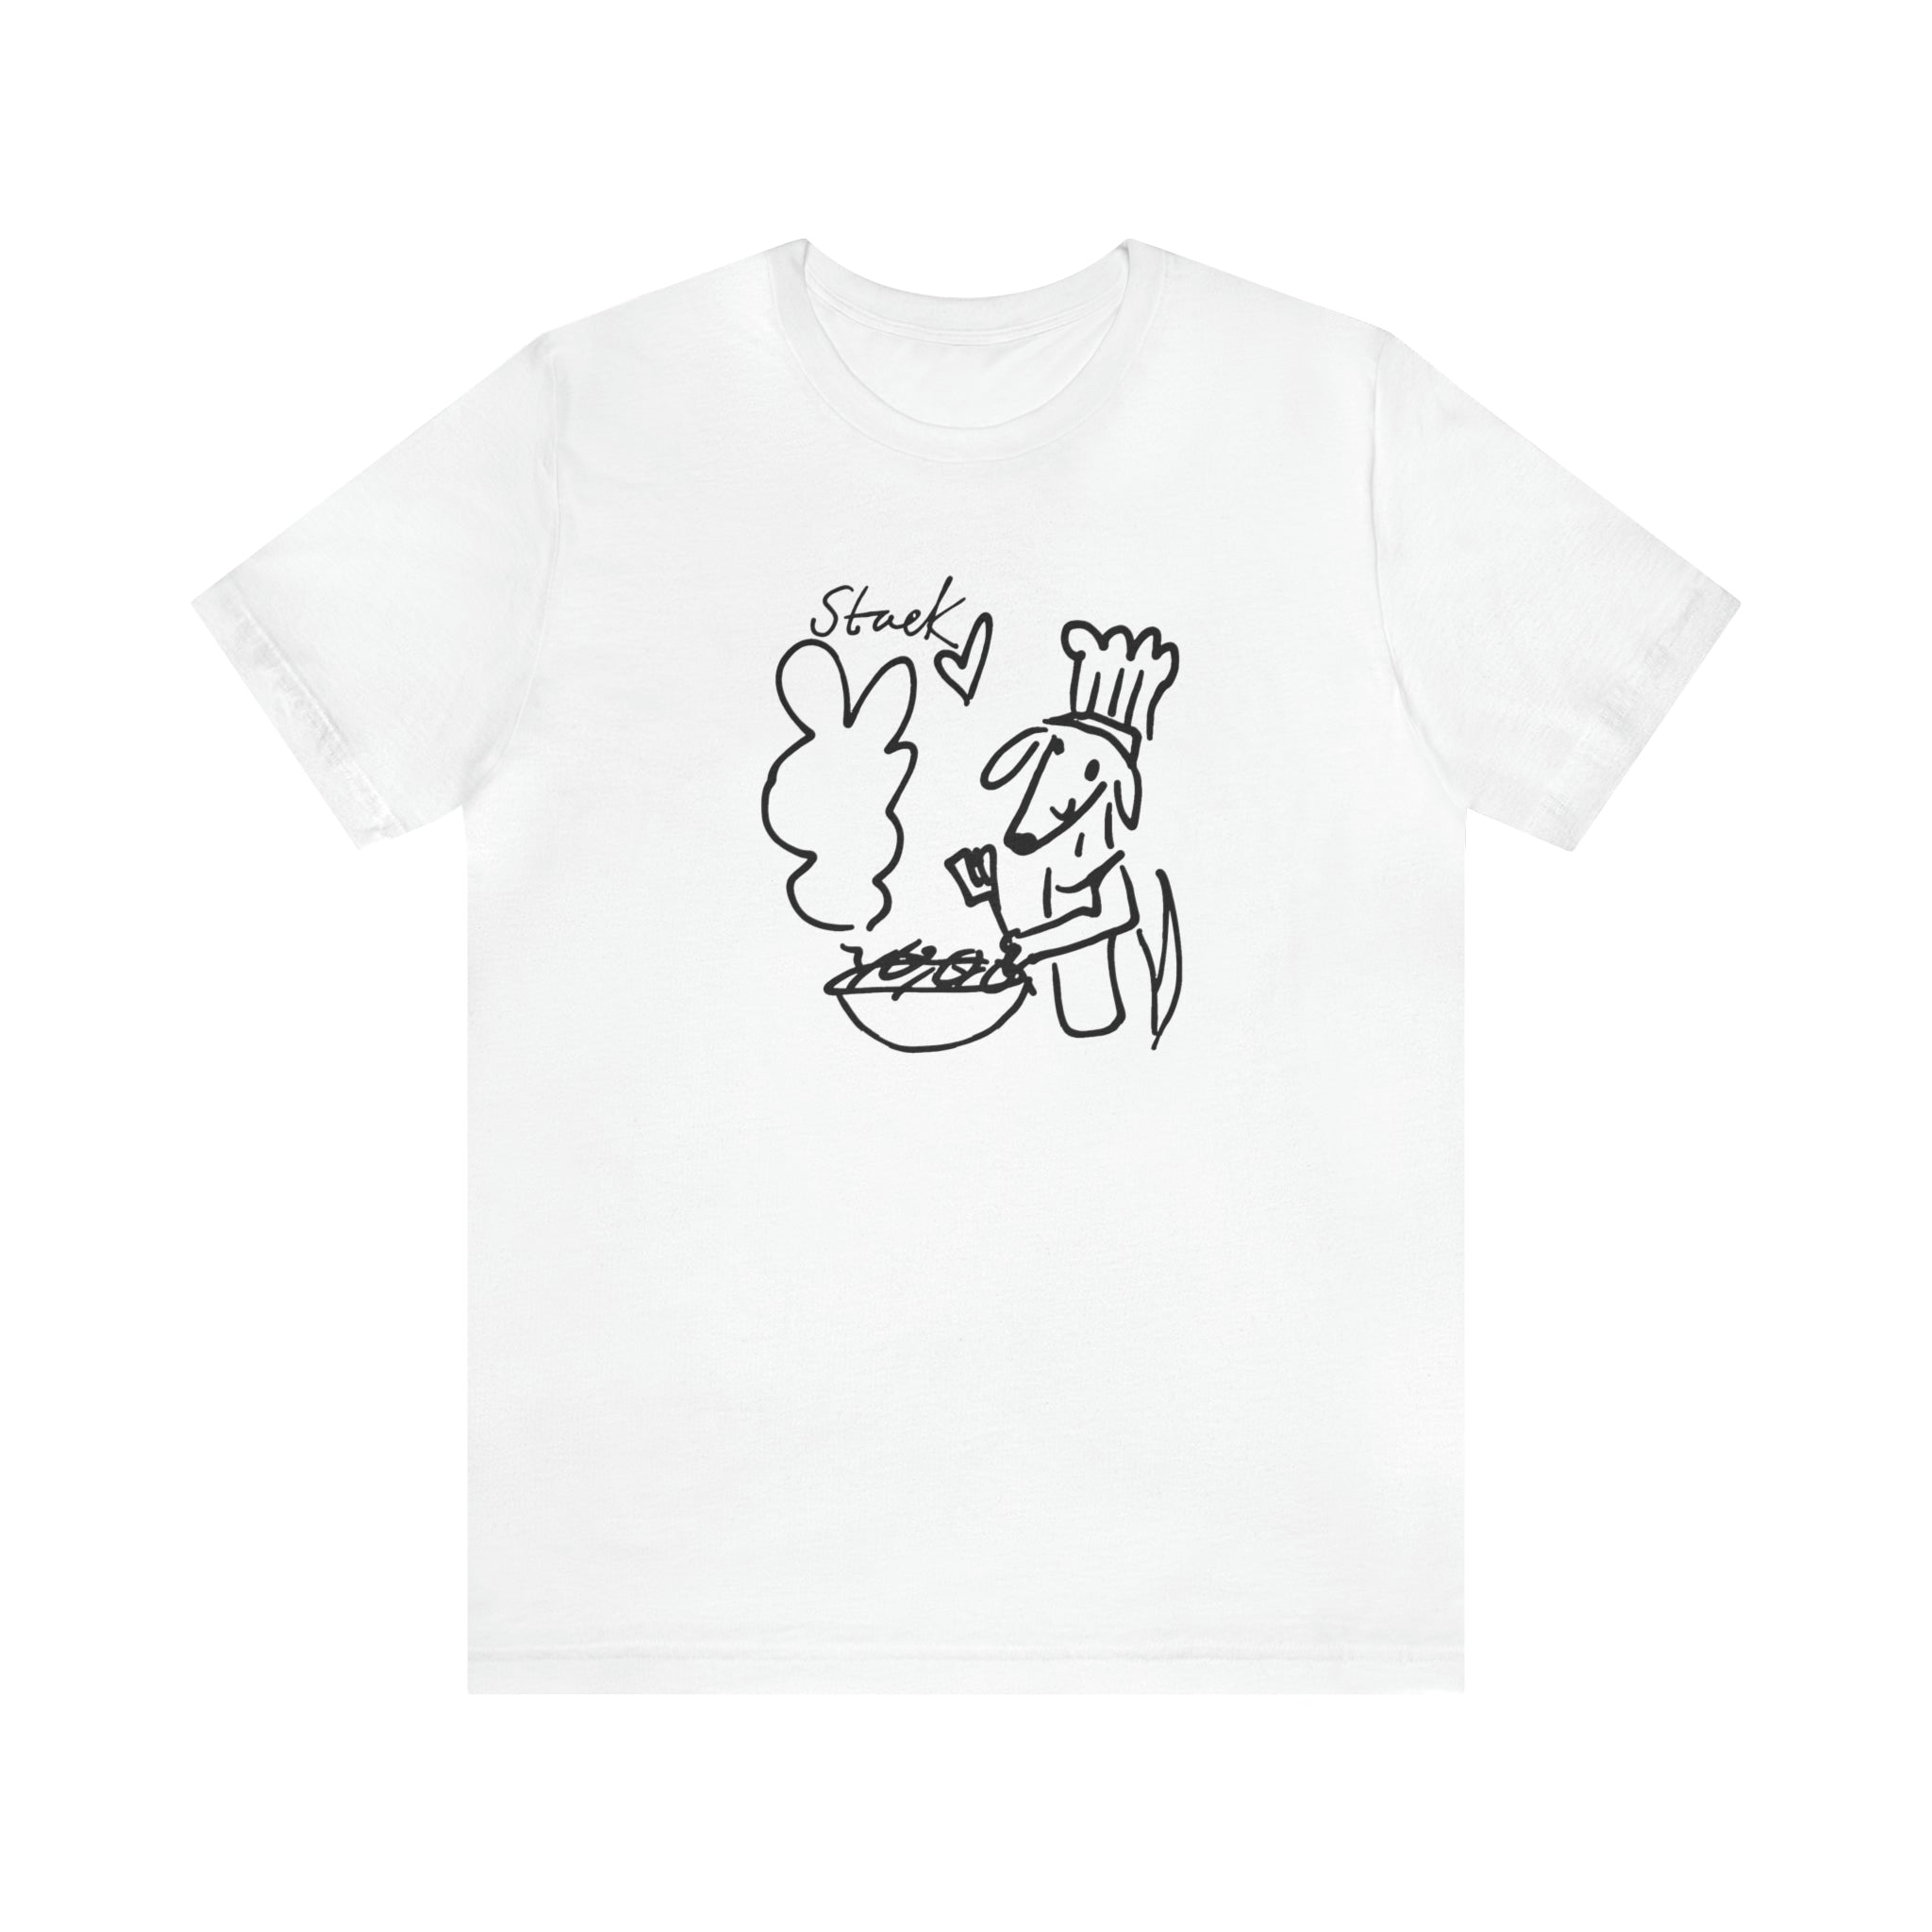 Staek! WM Follower Contribution : Unisex 100% Comfy Cotton, T-Shirt by Bella+Canvas